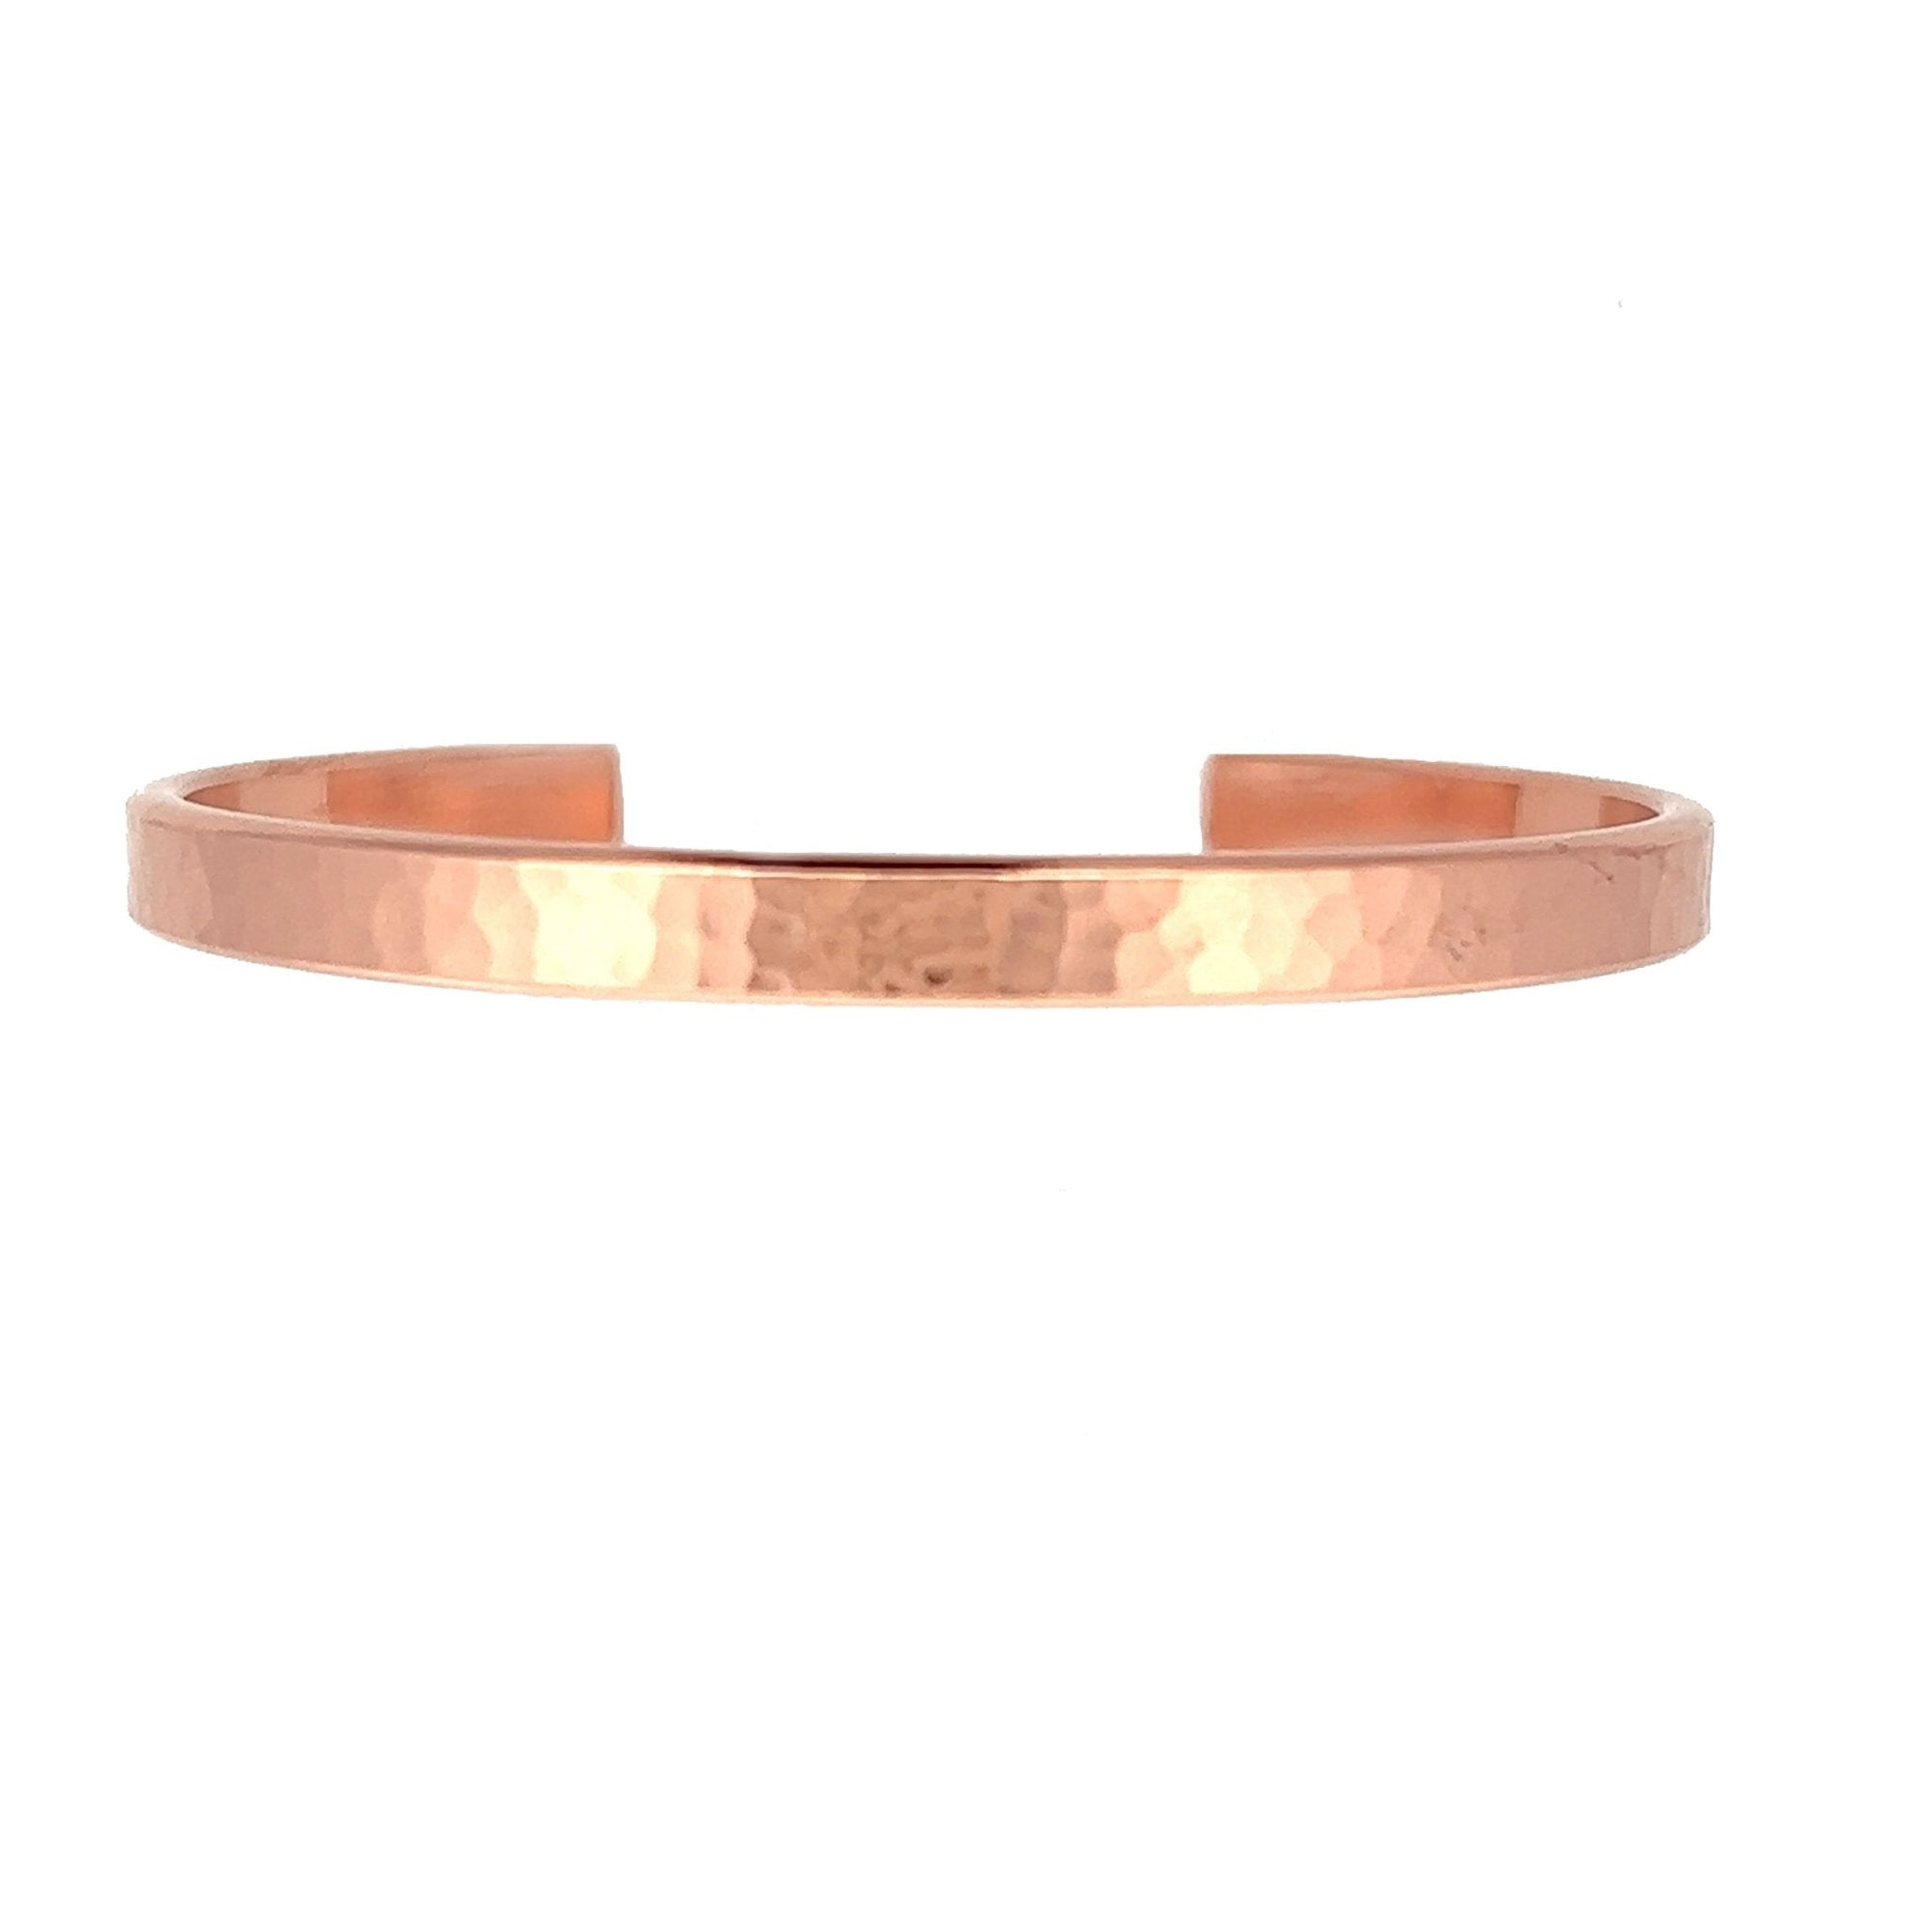 4mm Wide Men's Hammered Copper Cuff Bracelet - Detail